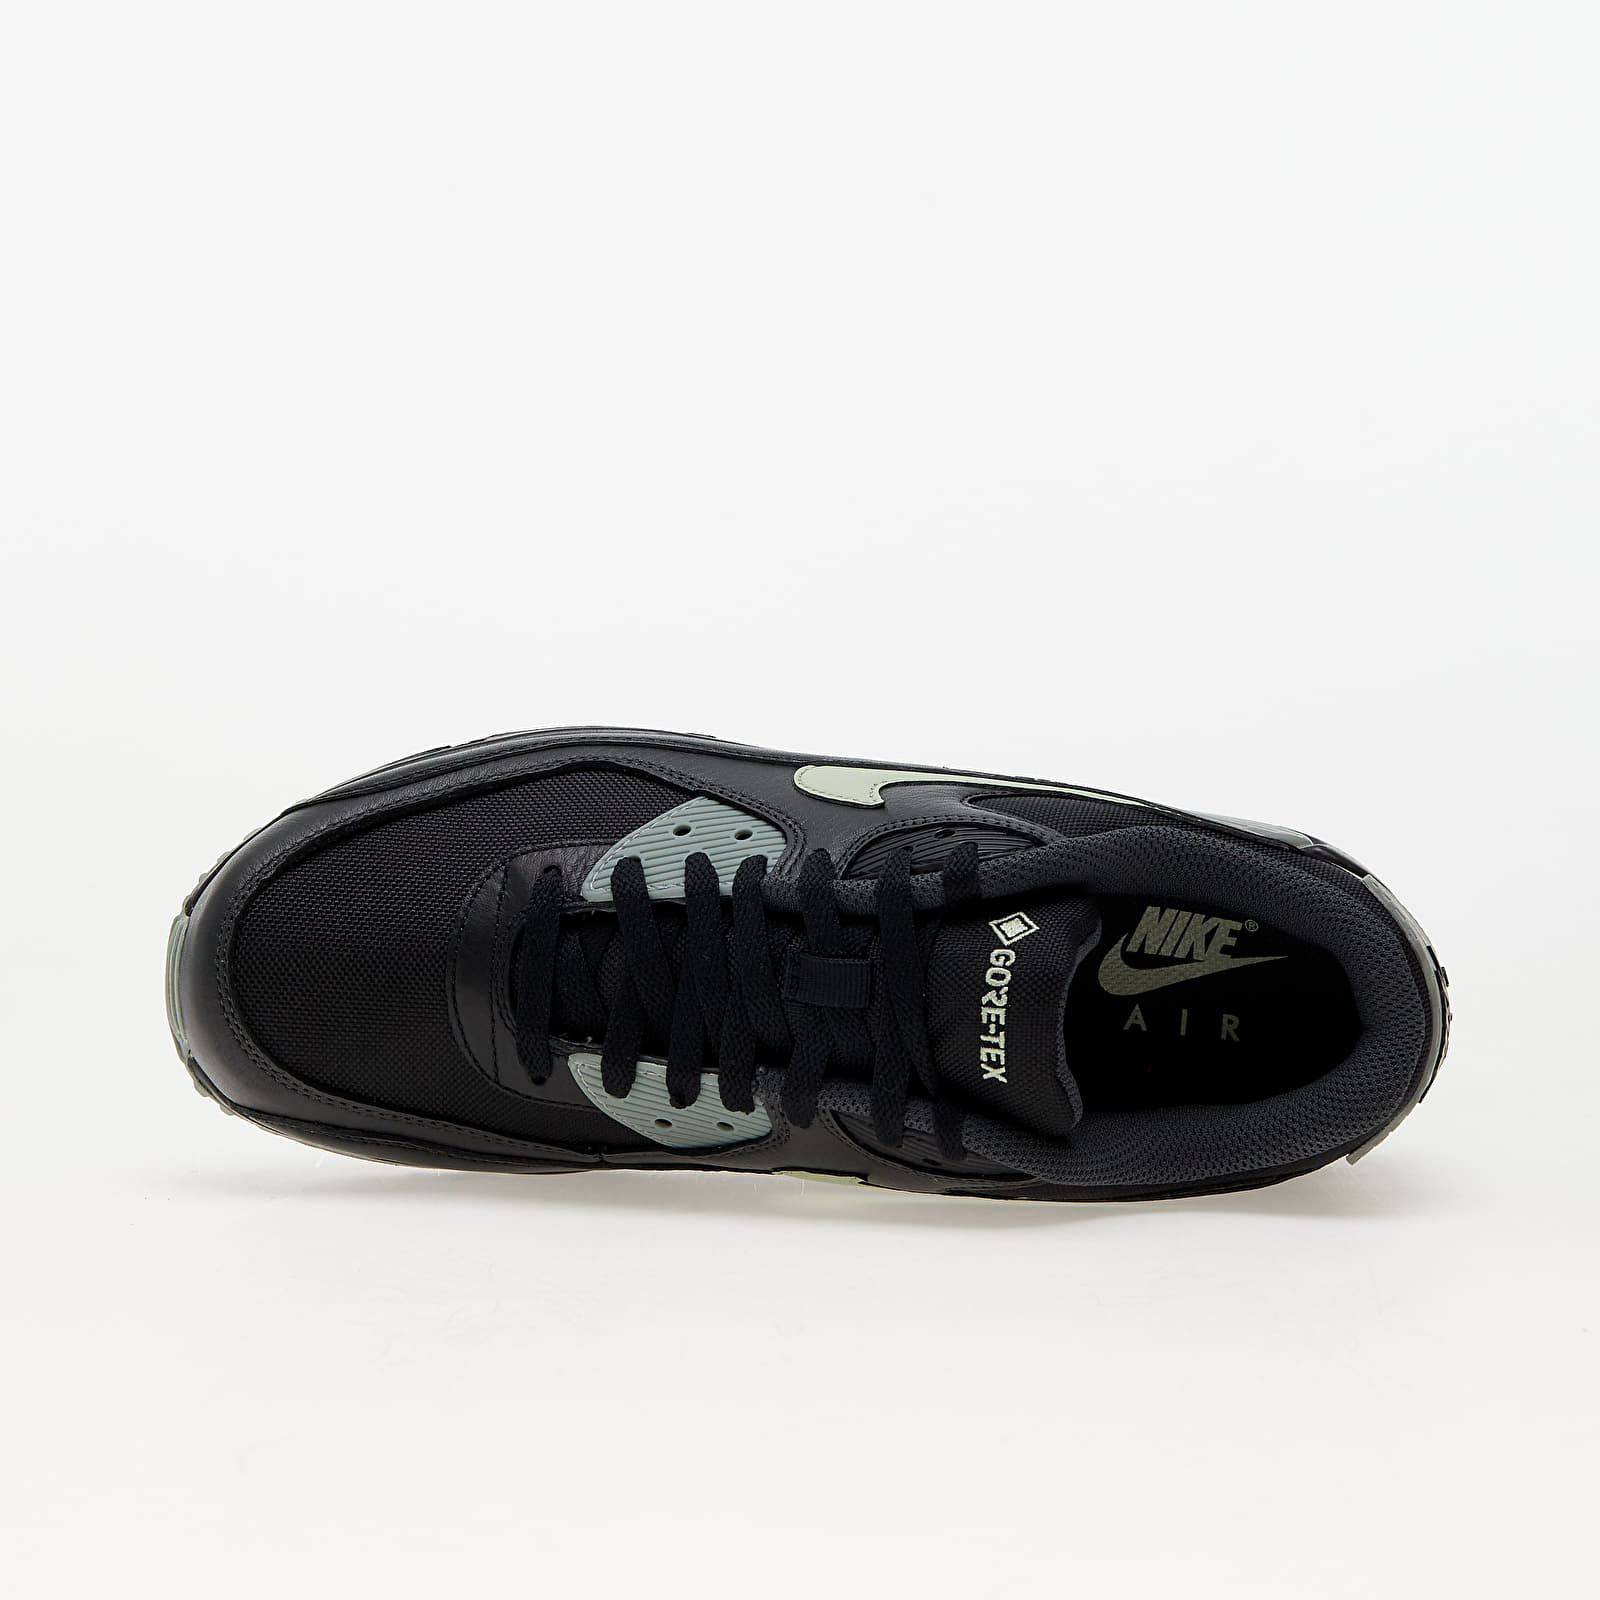 Men's shoes Nike Air Max 90 GTX Black/ Honeydew-Anthracite-Mica Green